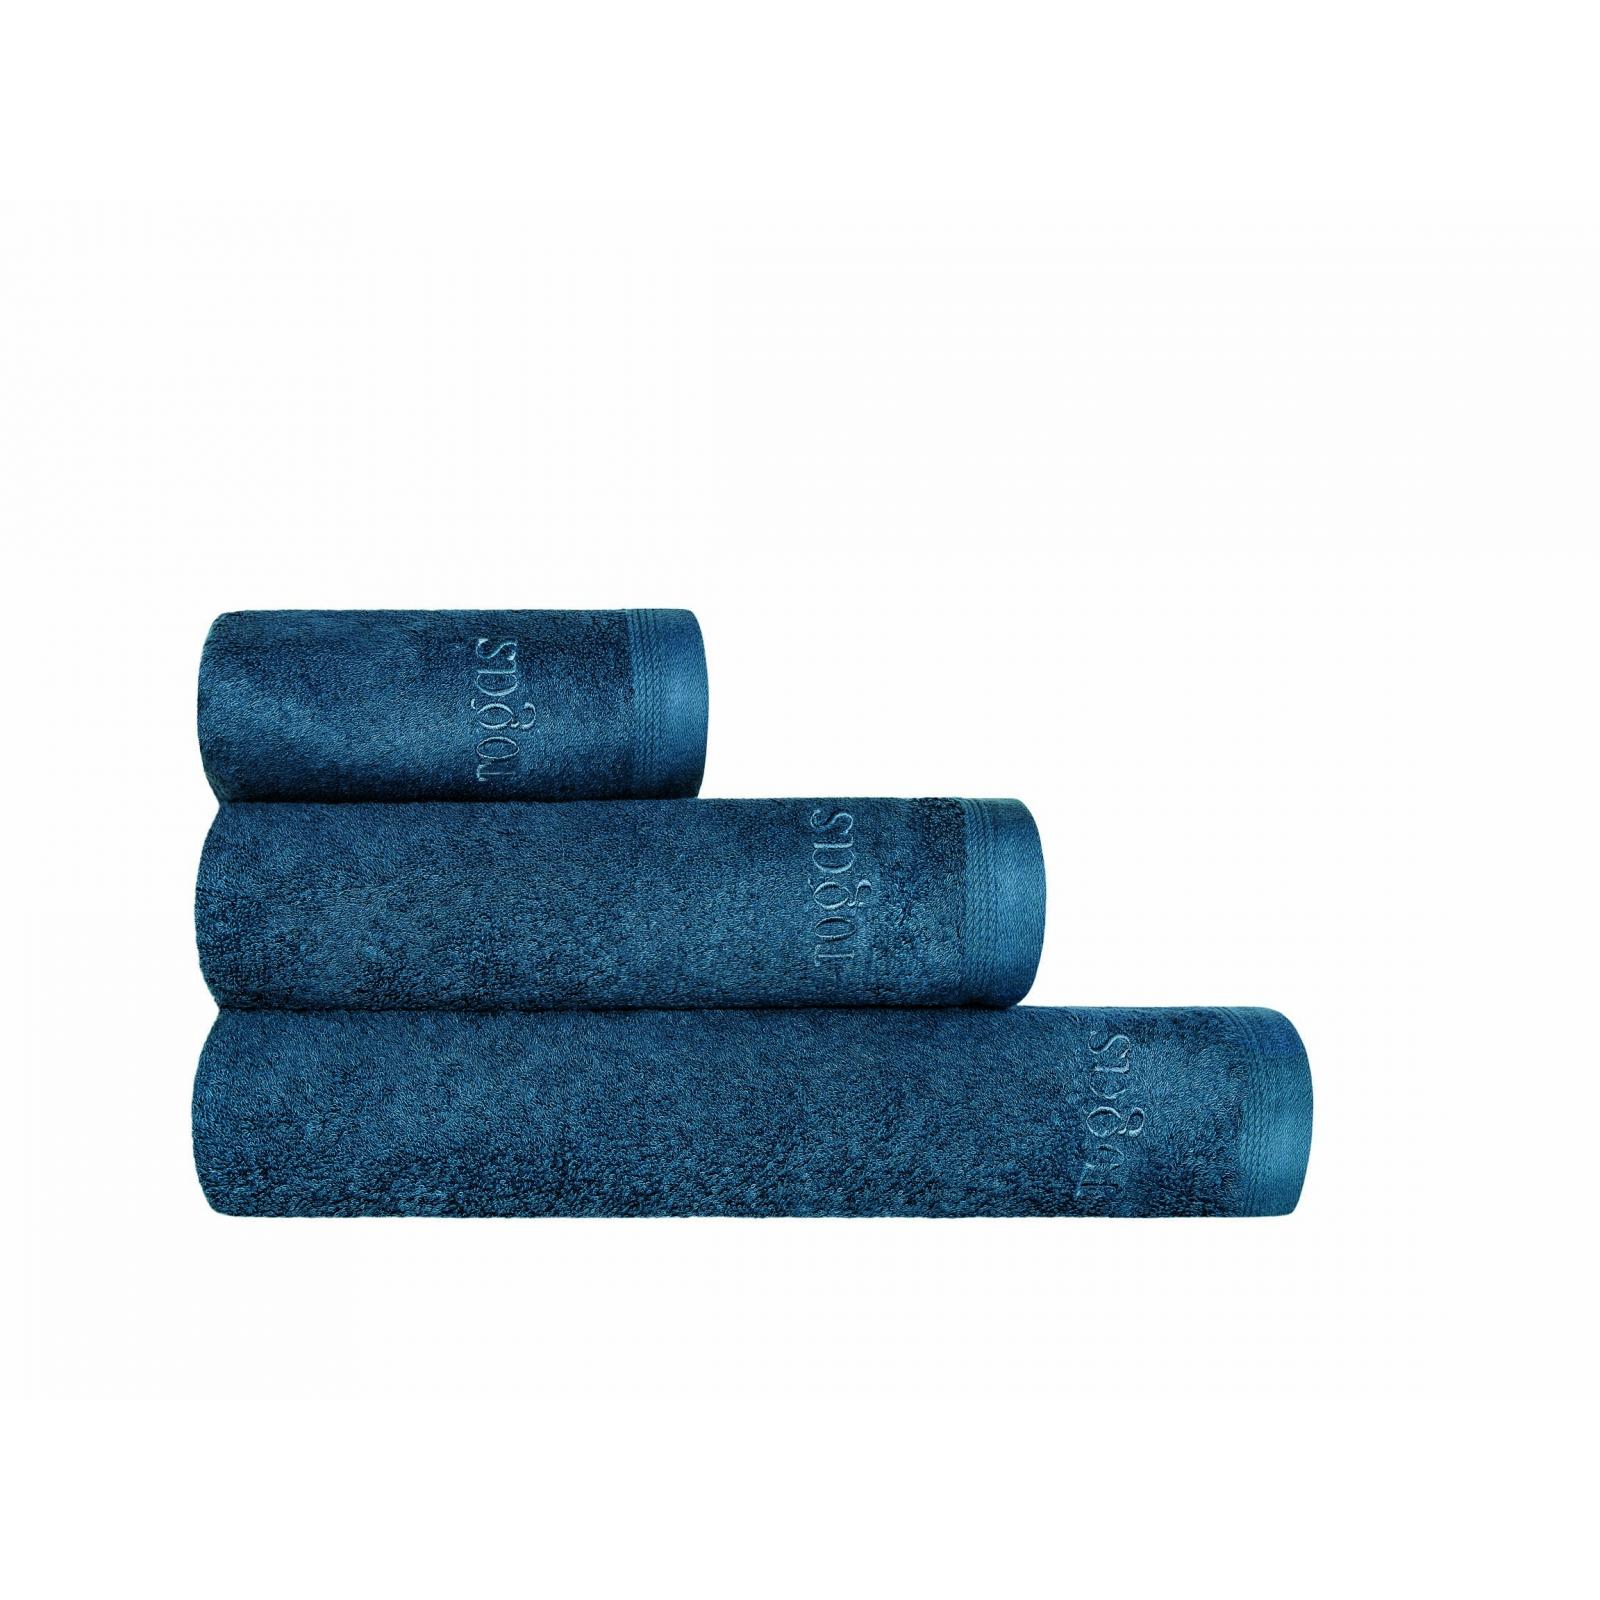 Полотенце Togas Пуатье темно-синее 70х140 полотенце togas шантильи экру мятный 70х140